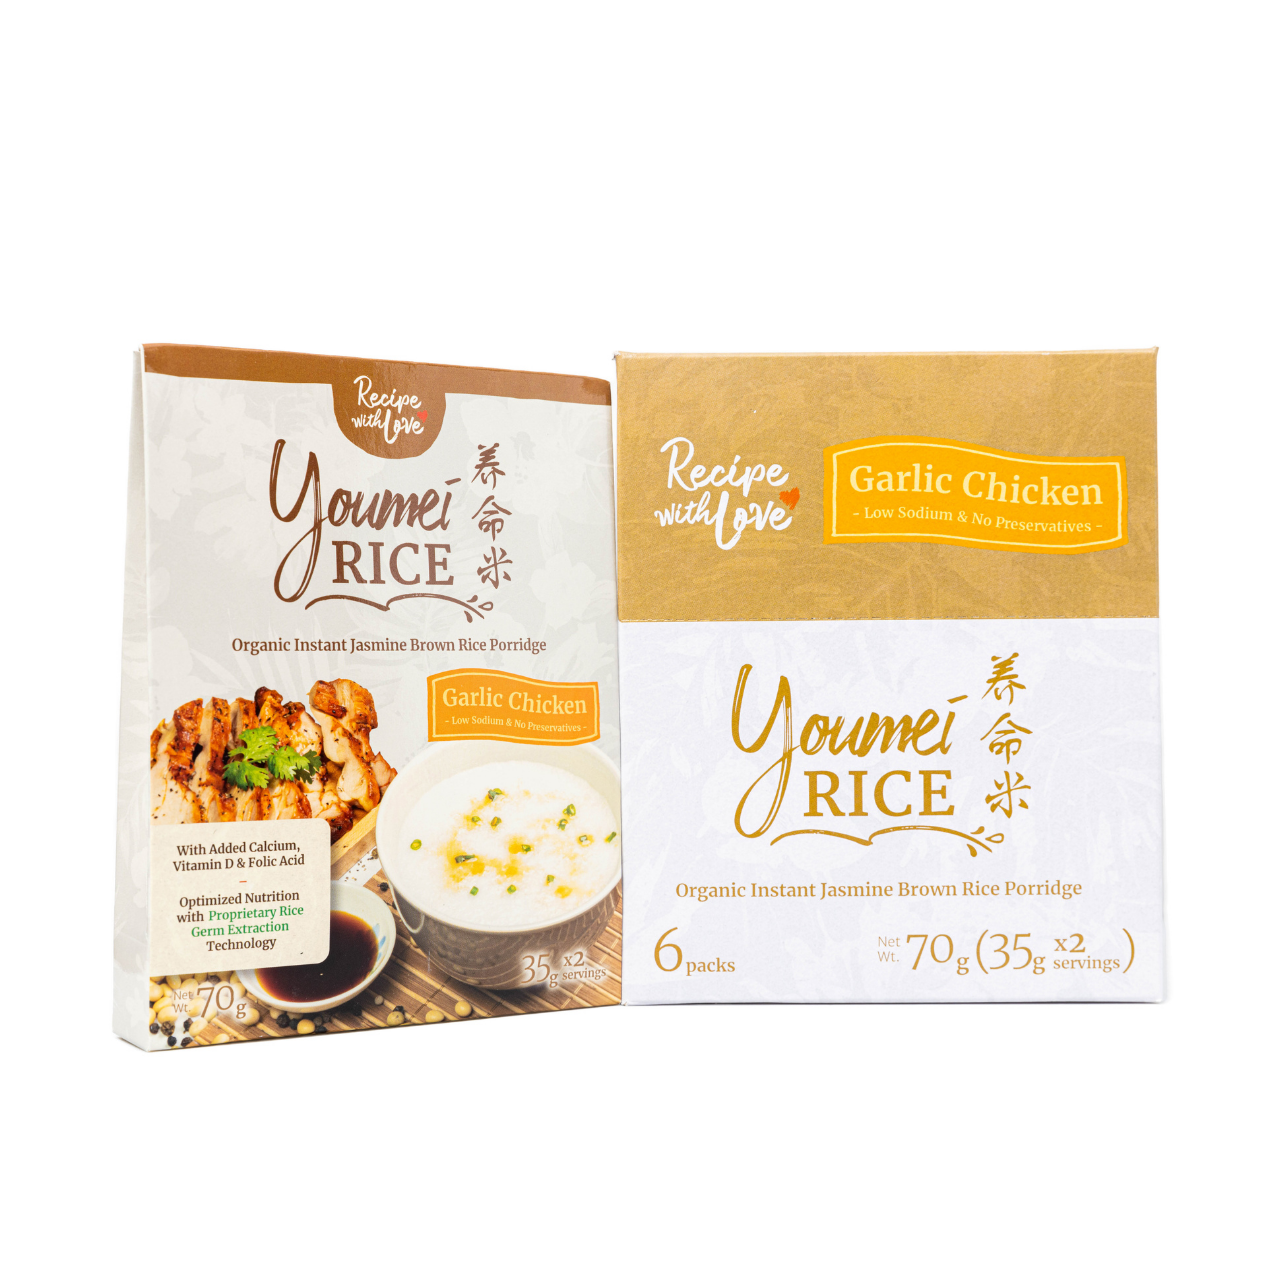 Recipe With Love Organic Instant Jasmine Brown Rice Porridge - Garlic Chicken (BOX)